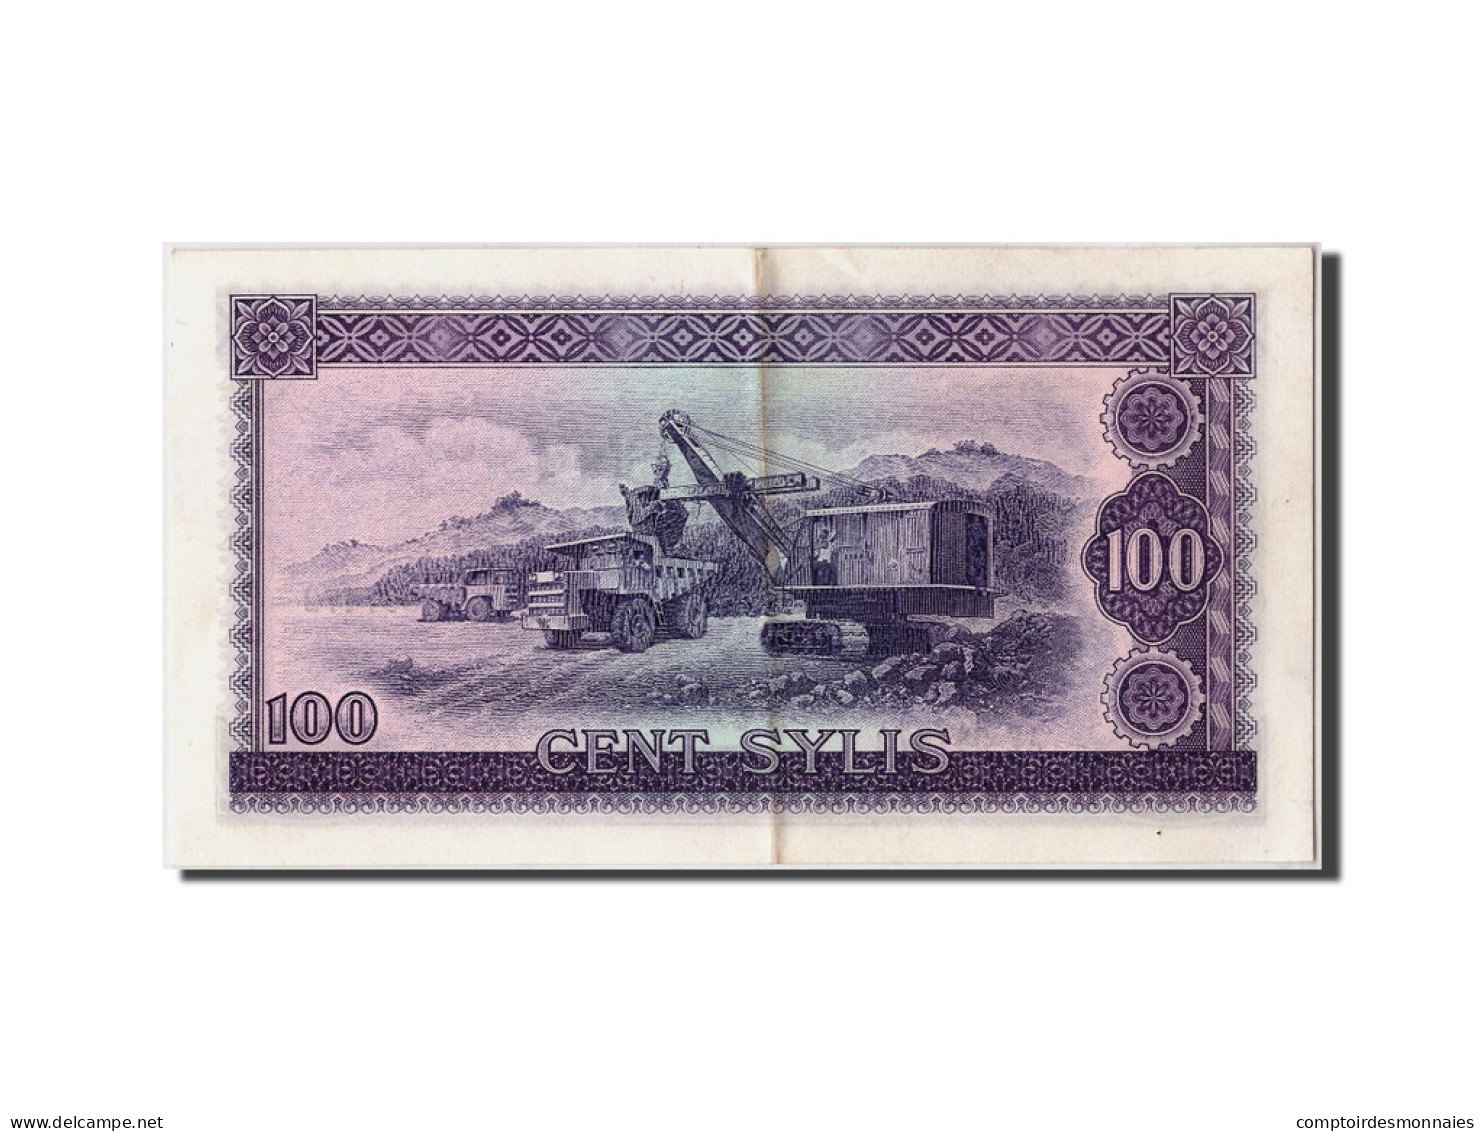 Billet, Guinea, 100 Sylis, 1971, 1960-03-01, KM:19, SUP - Guinea